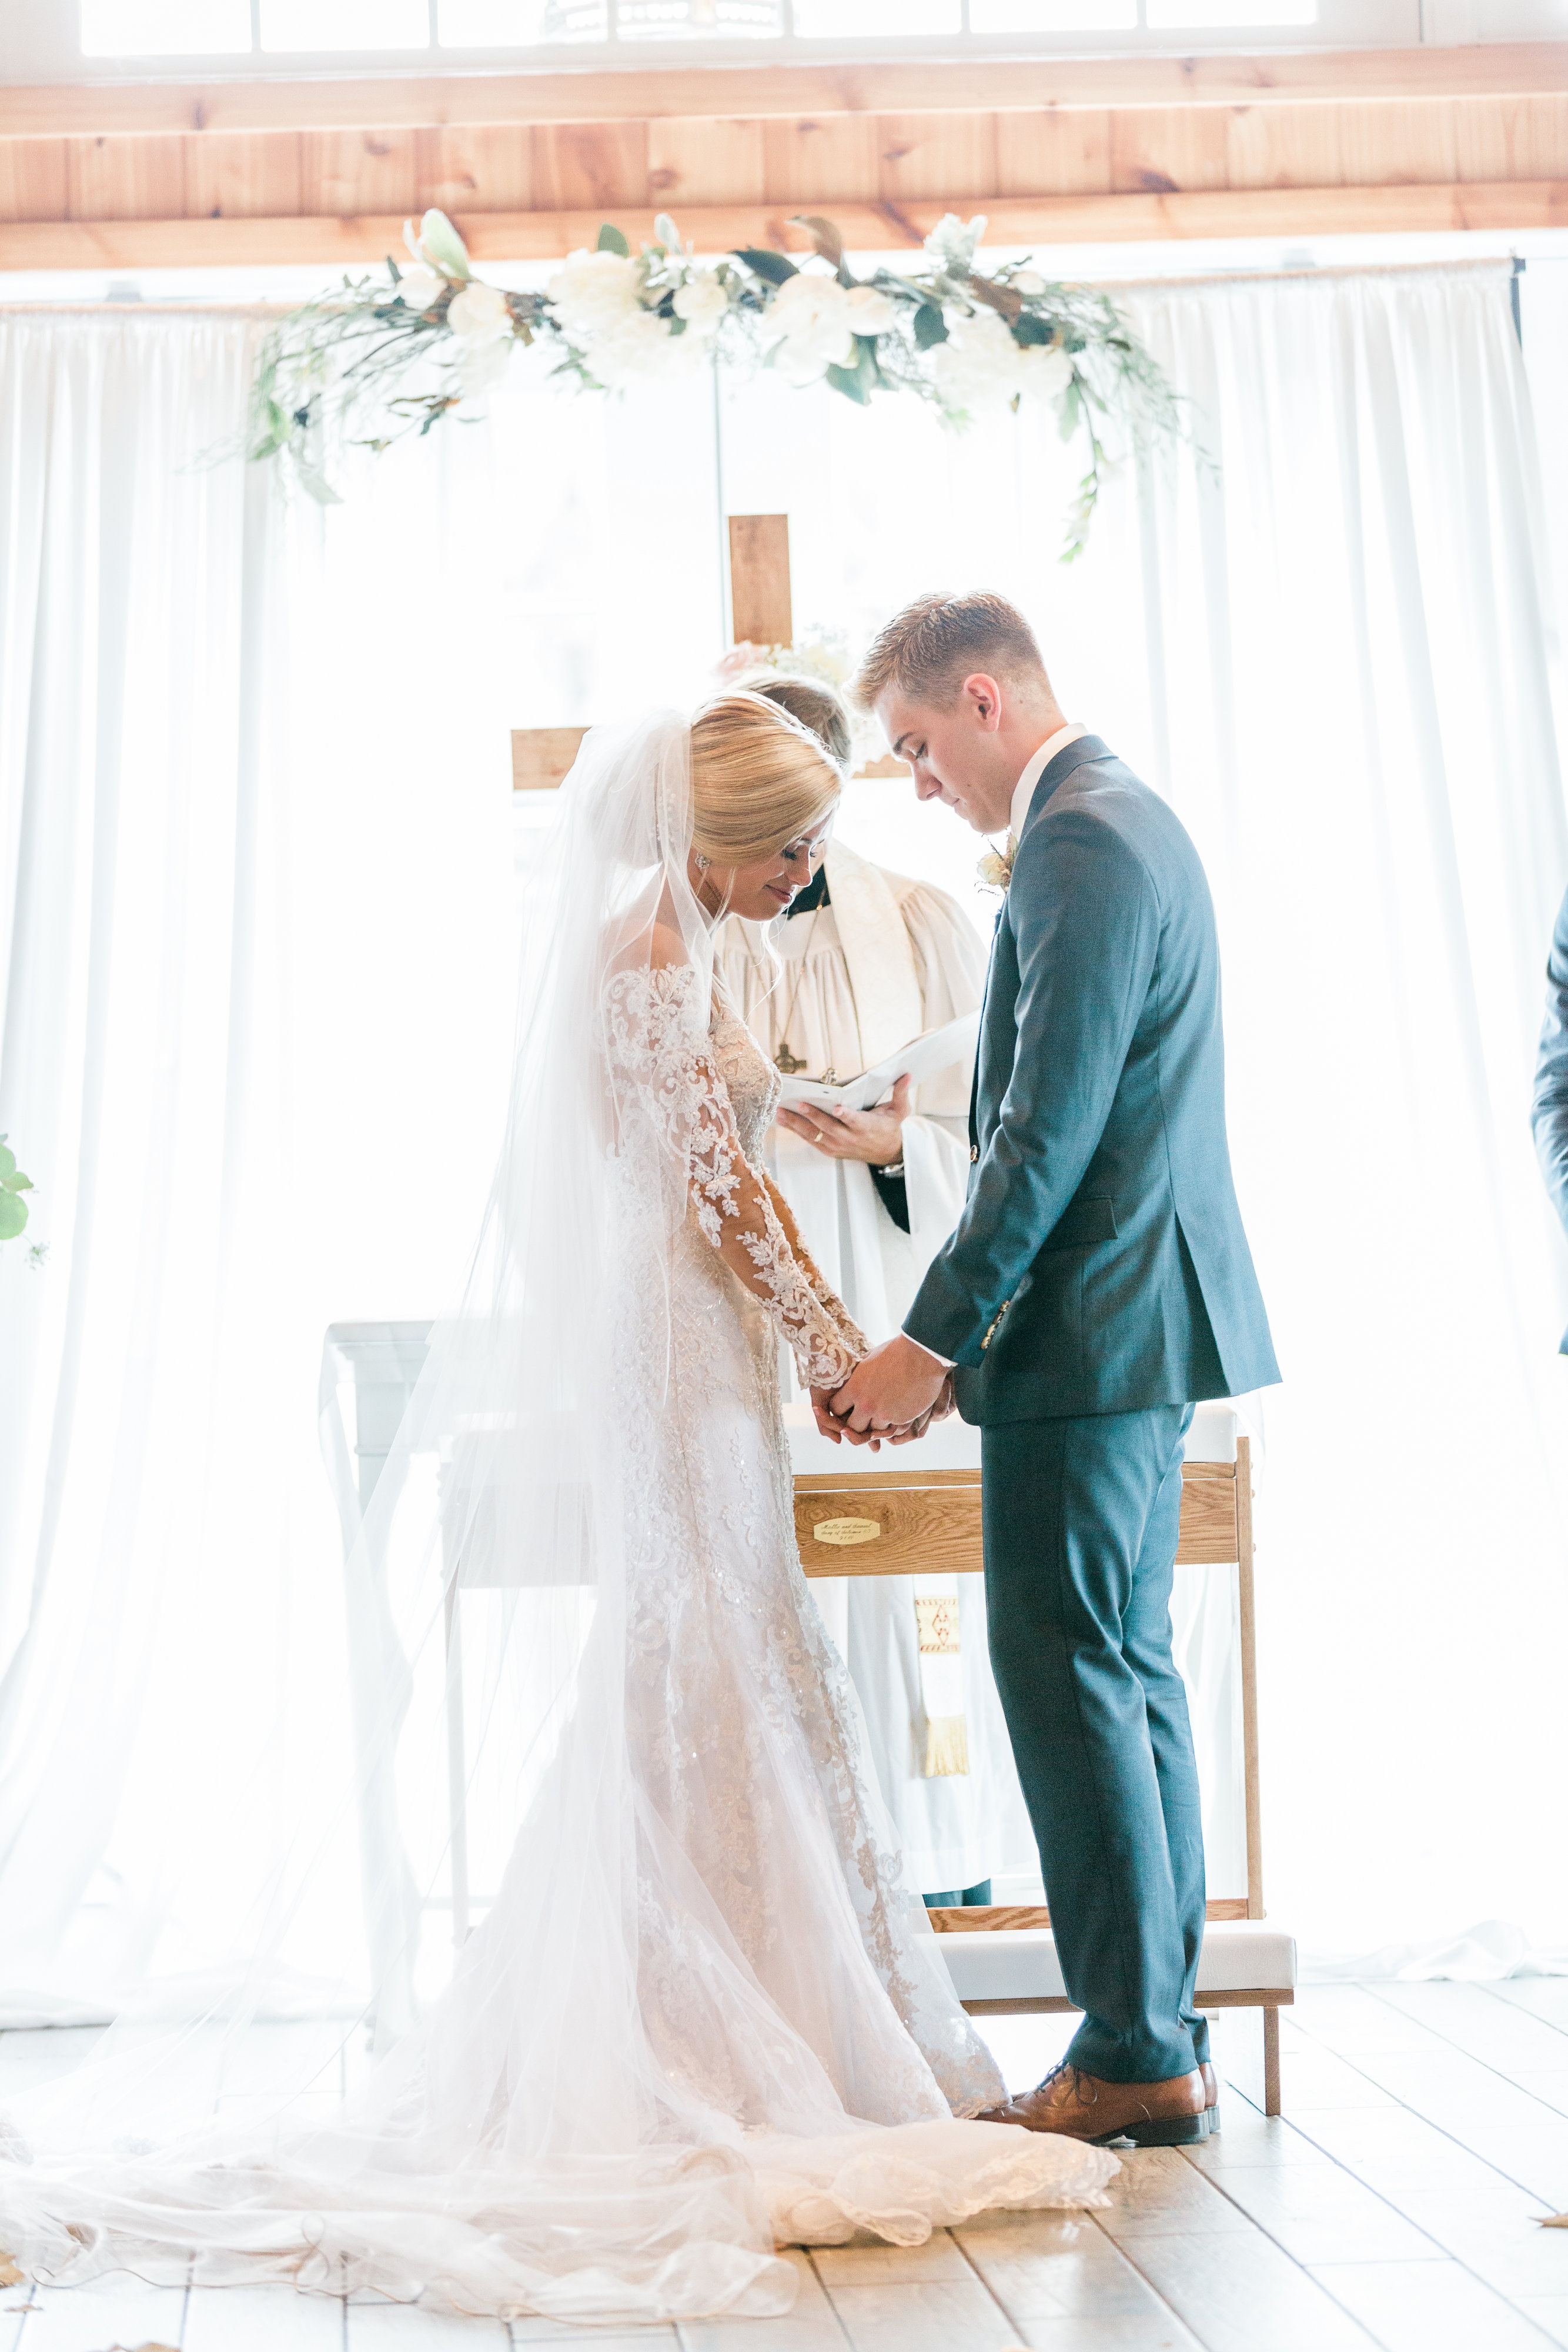 View More: http://chelseaschaeferphotography.pass.us/kesting-wedding-2018